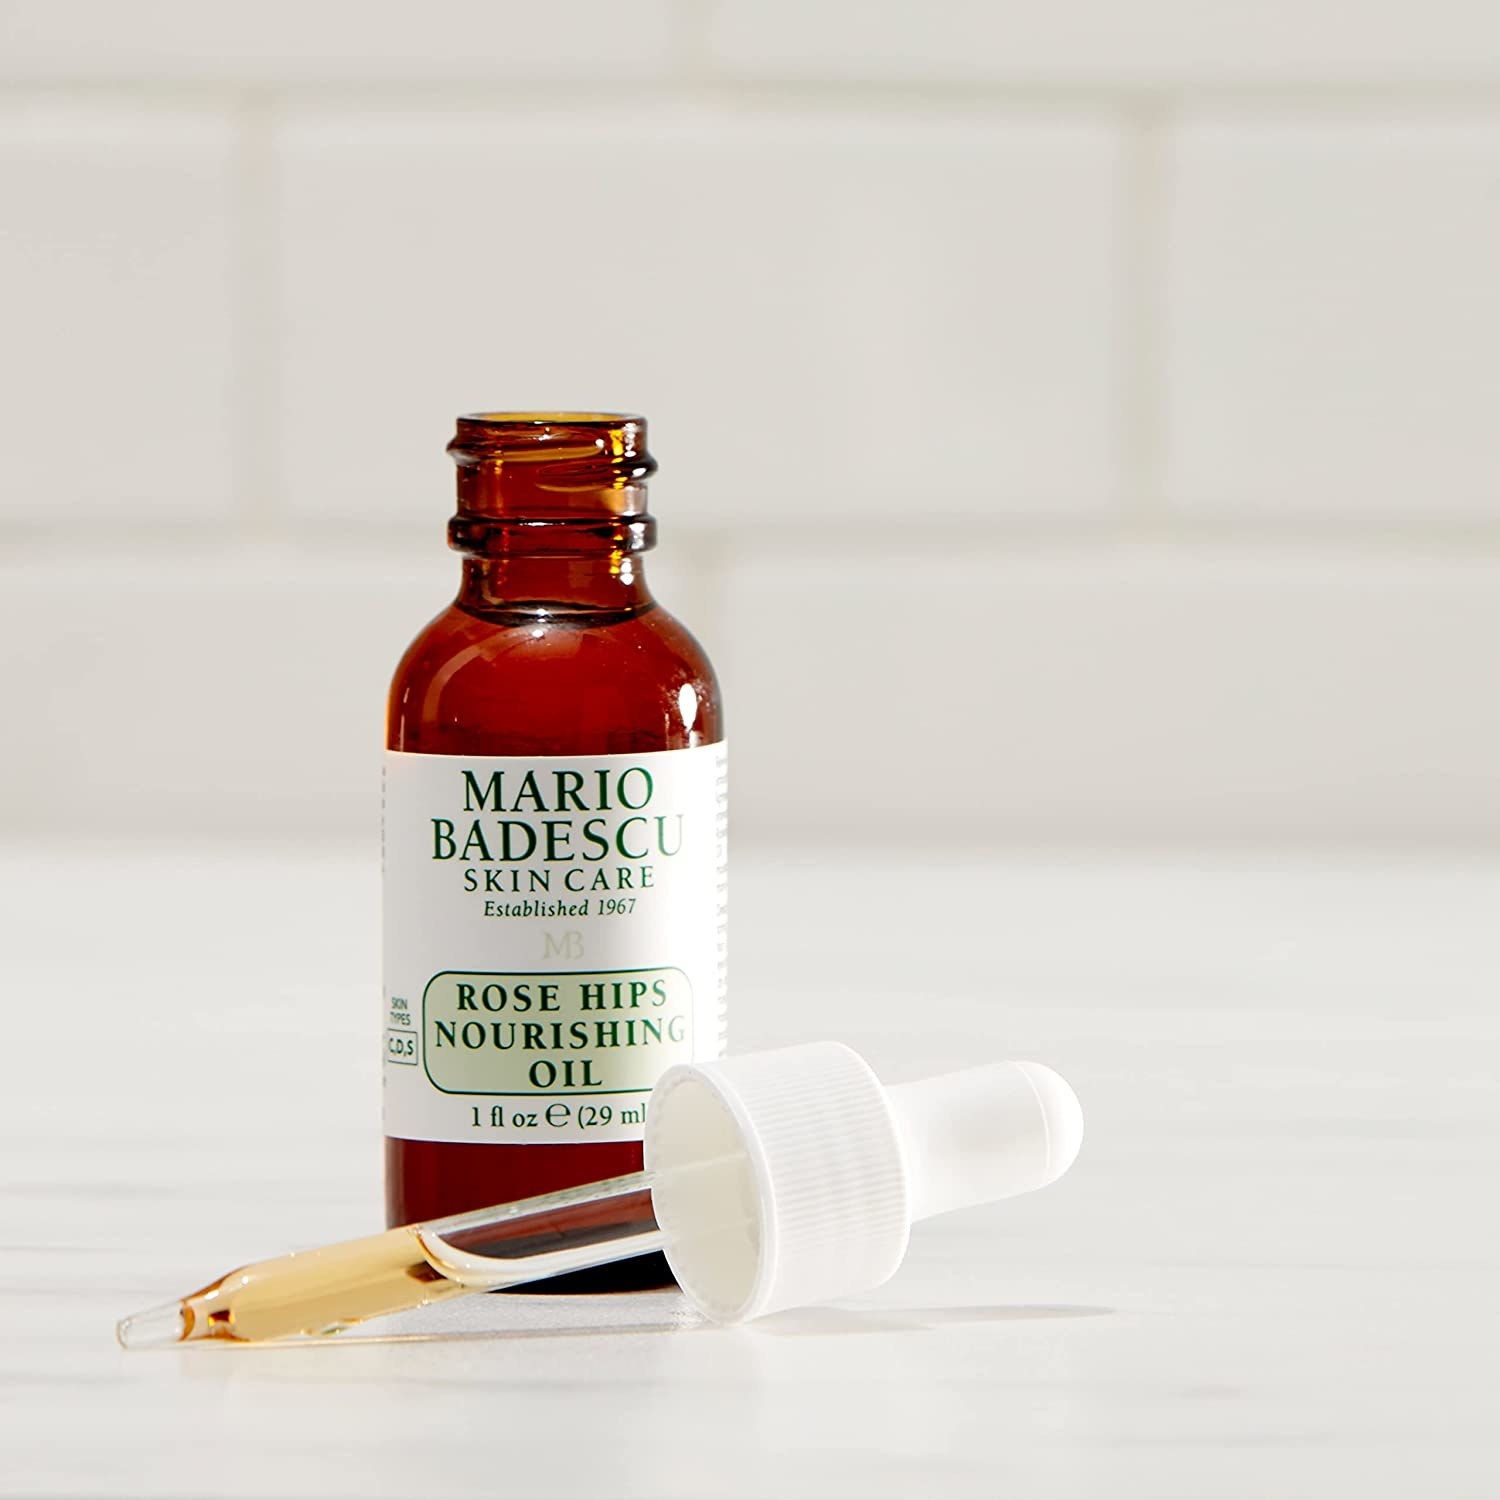 A bottle of Mario Badescu Skincare oil for skin